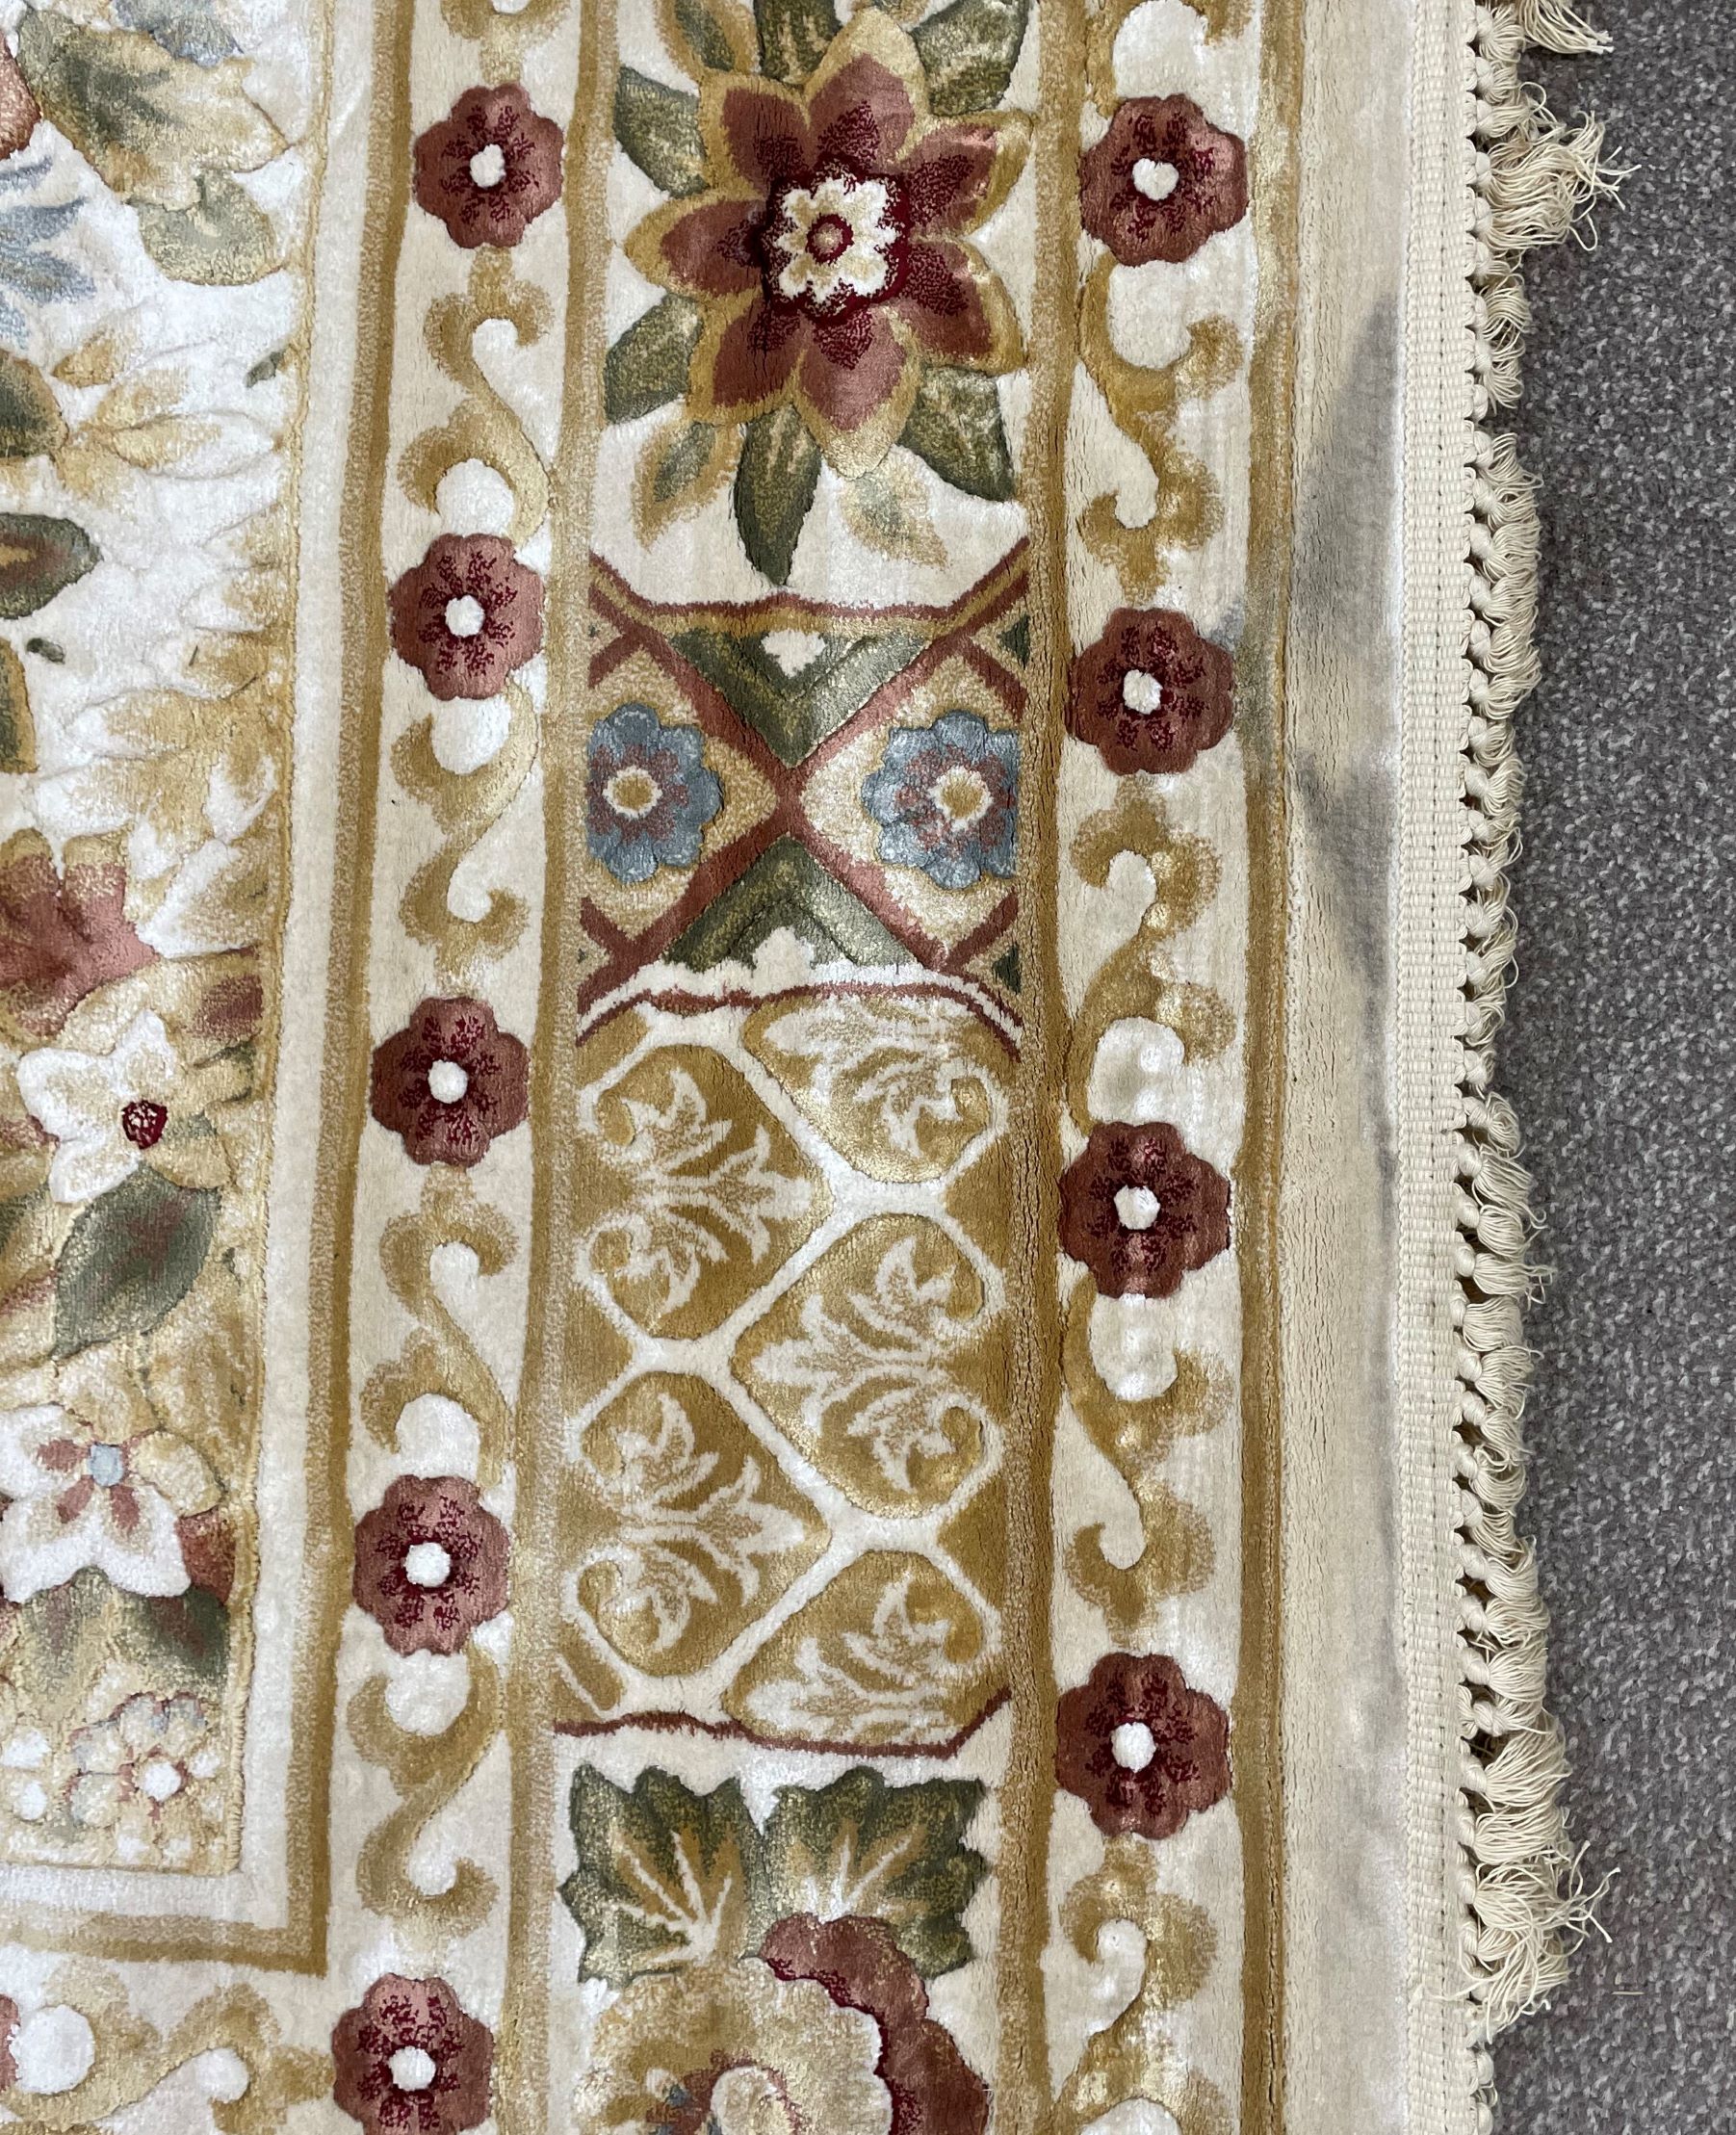 Gold & cream ground full pile Oriental carpet 350cm by 240cm - Image 2 of 4